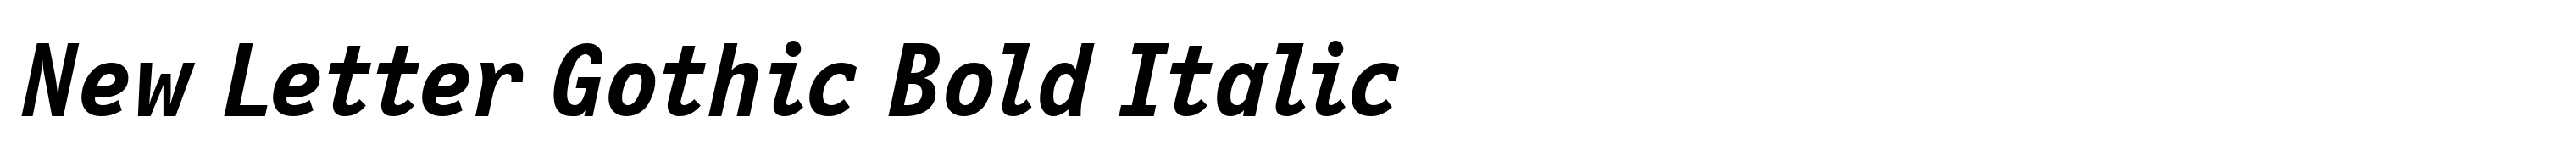 New Letter Gothic Bold Italic